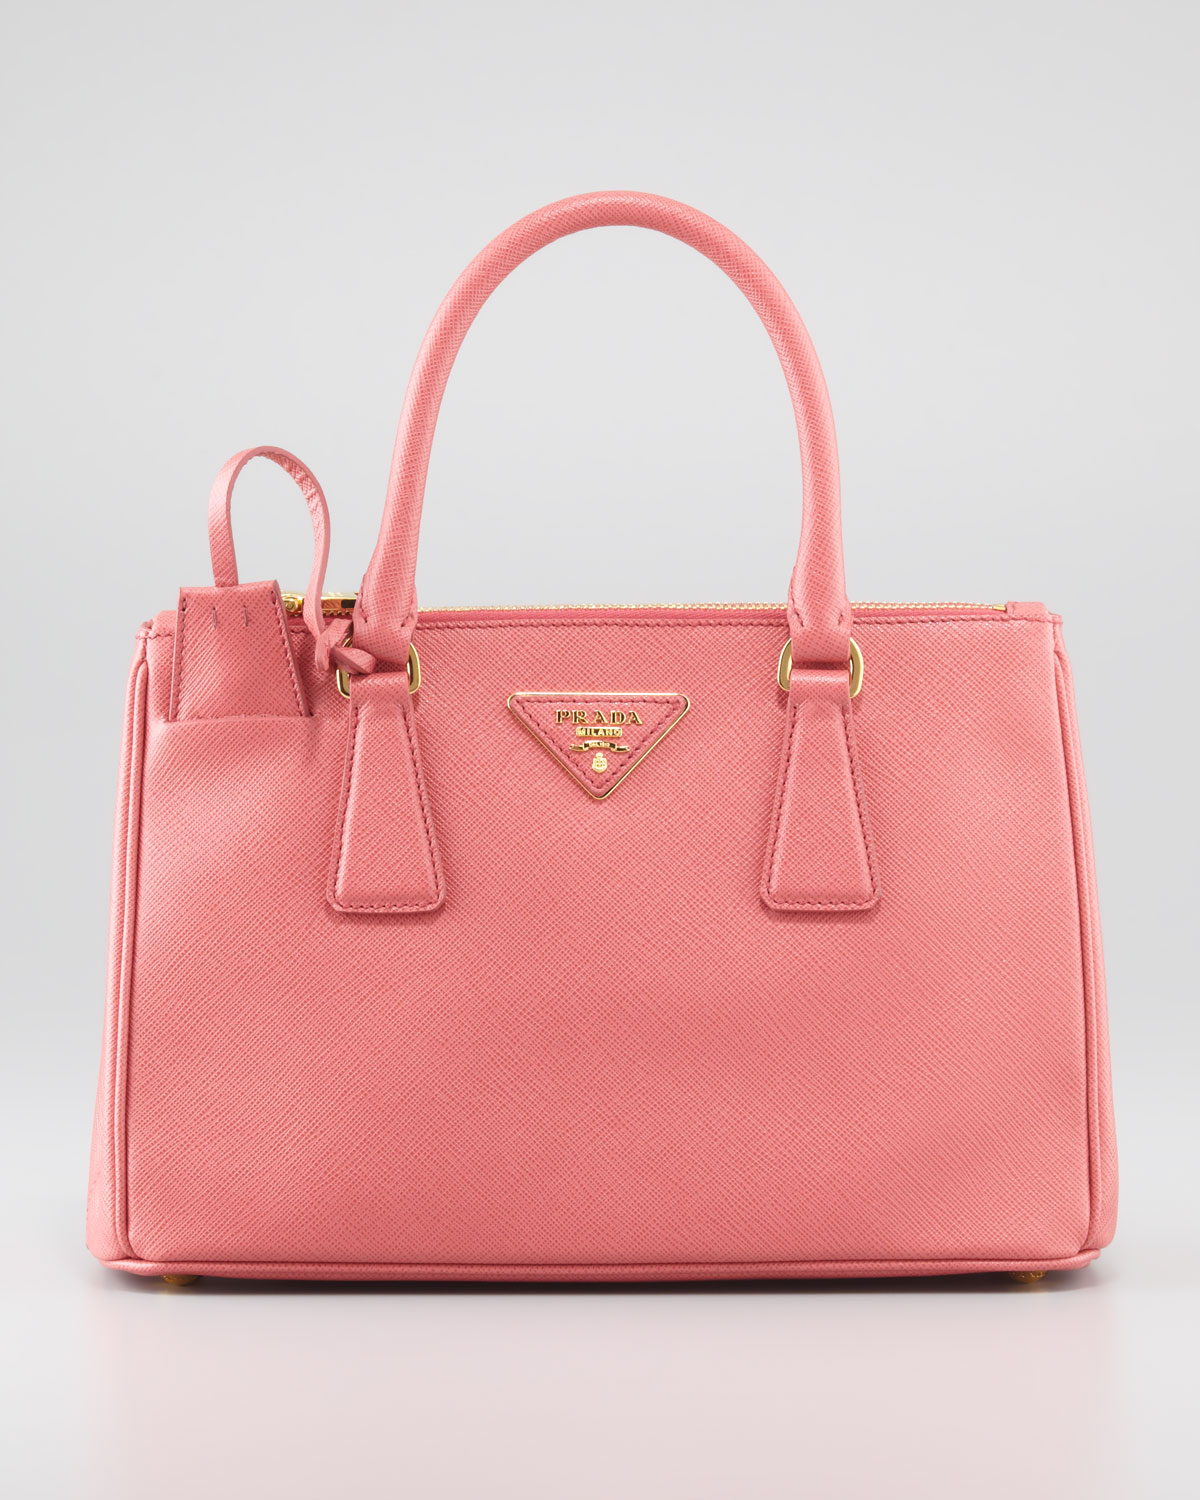 Prada Mini Saffiano Lux Tote Bag in Pink - Lyst